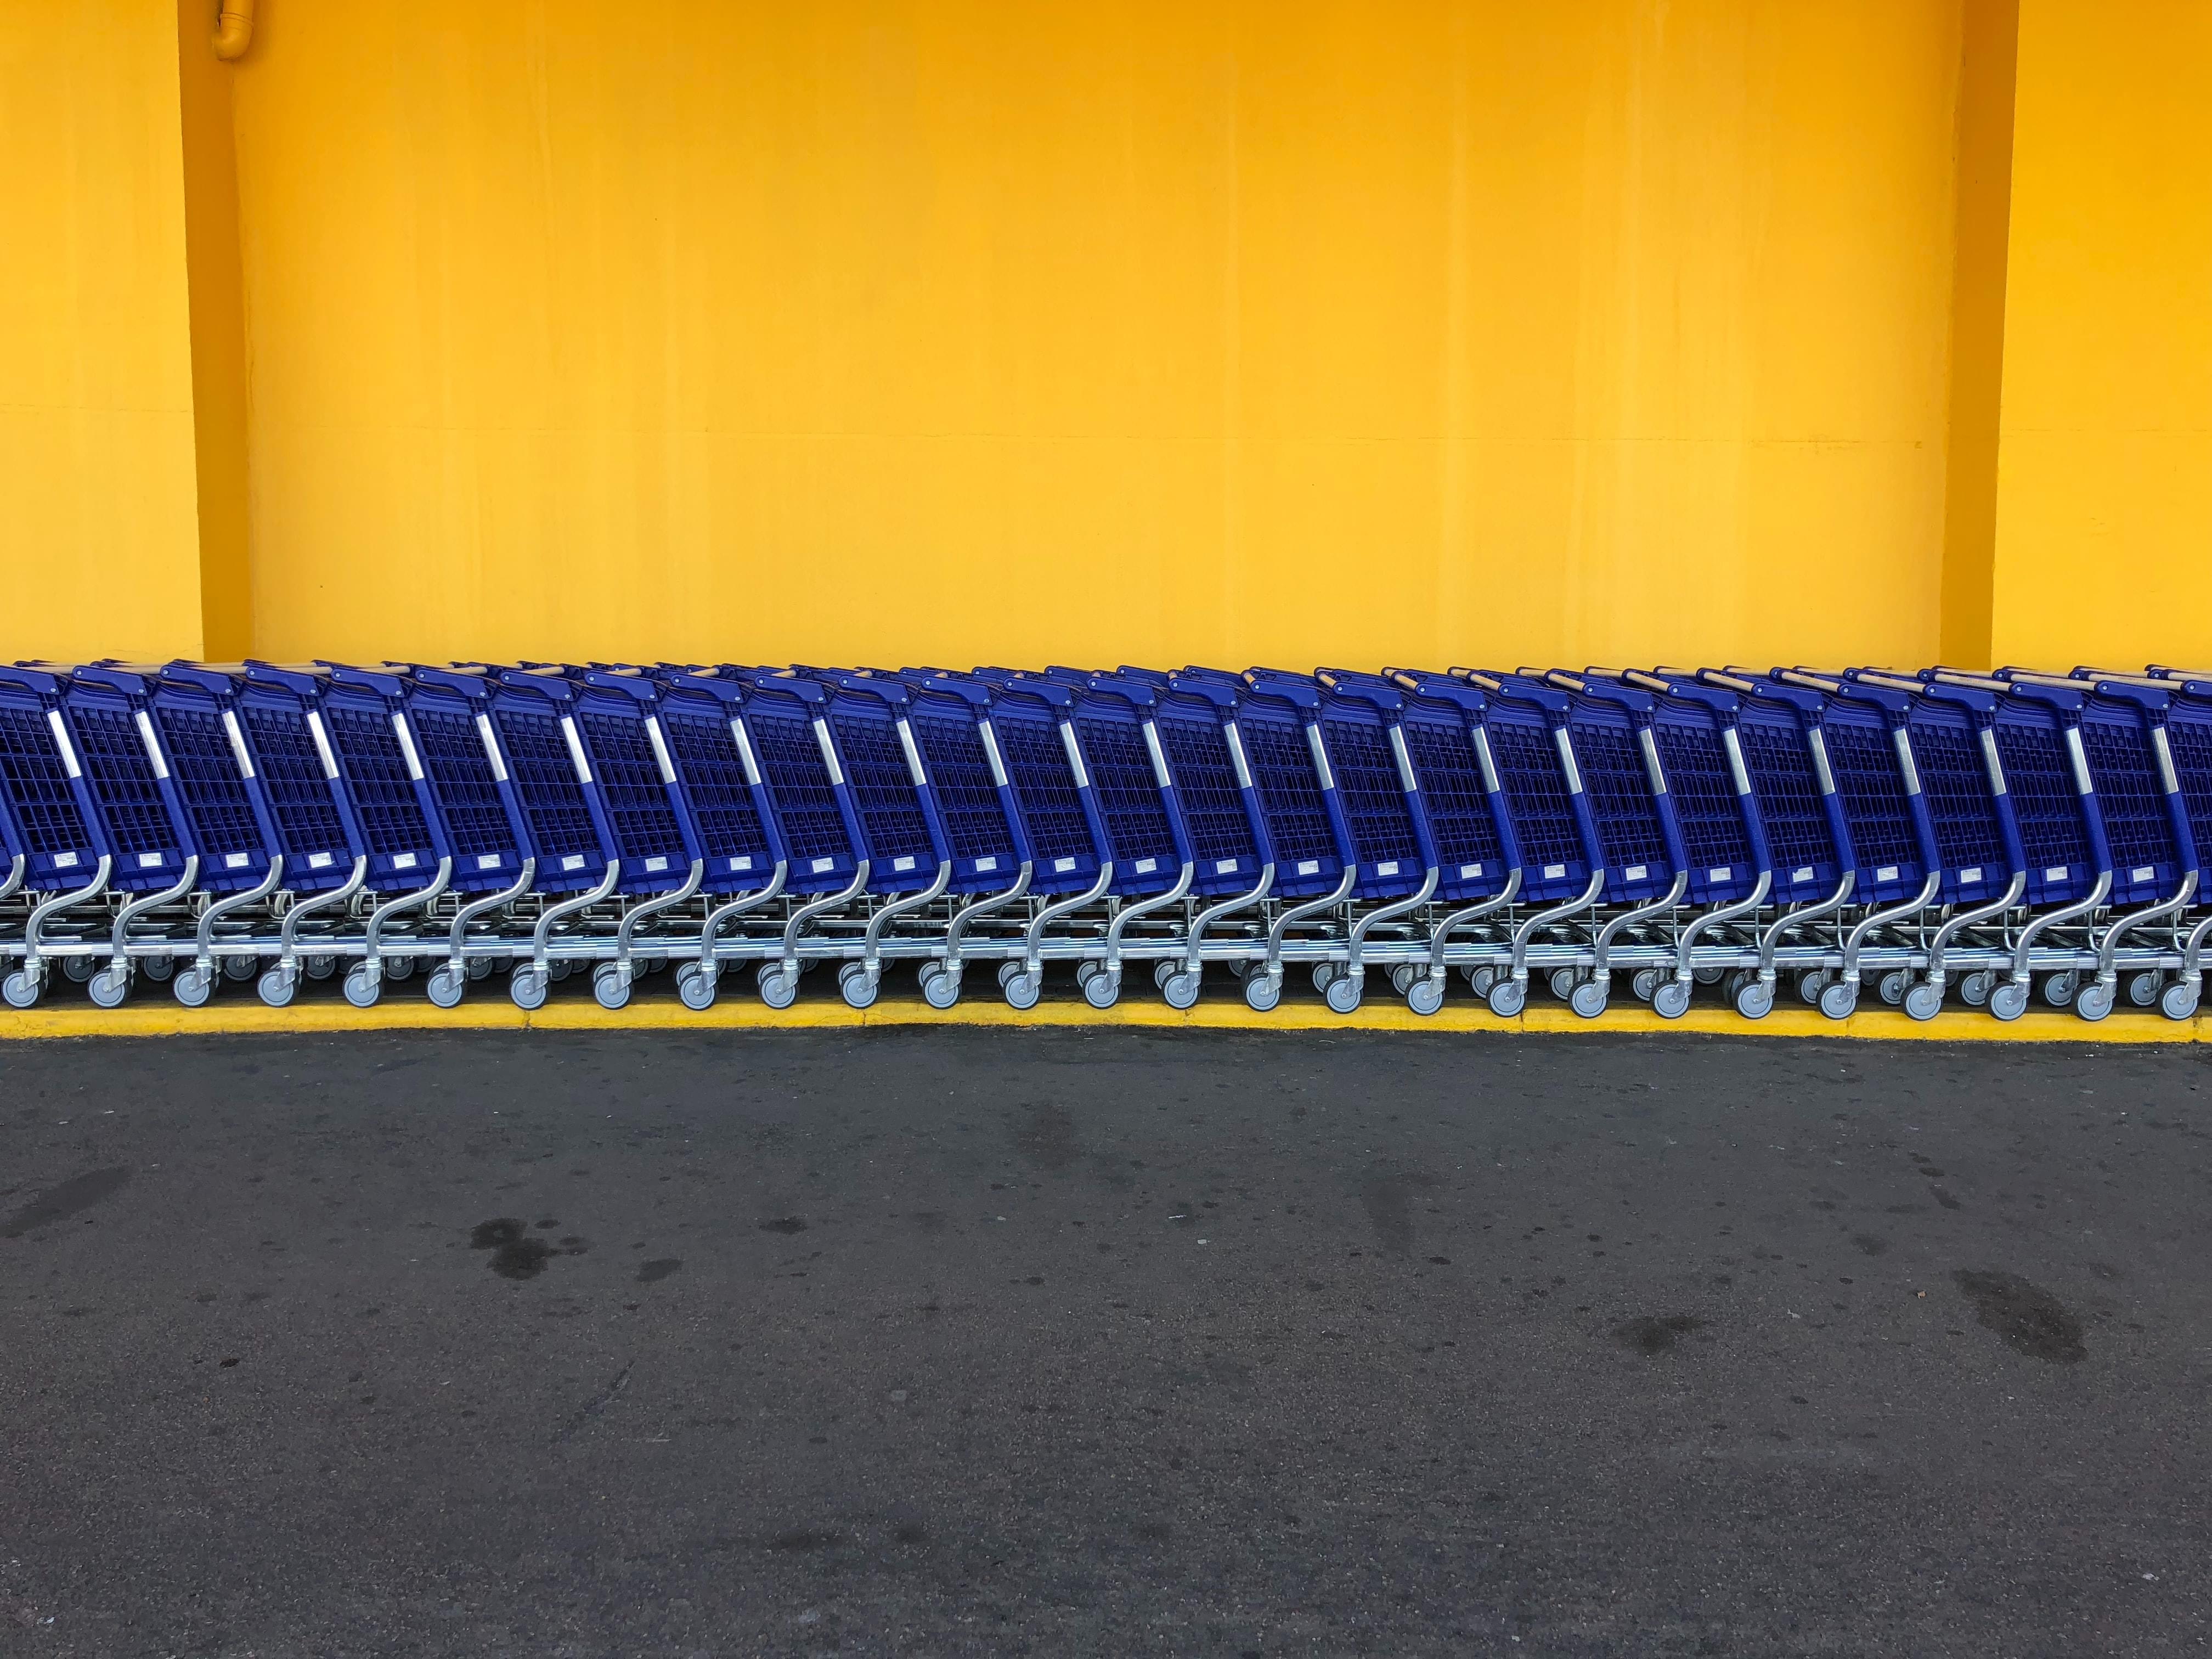 Walmart blue carts against a yellow wall